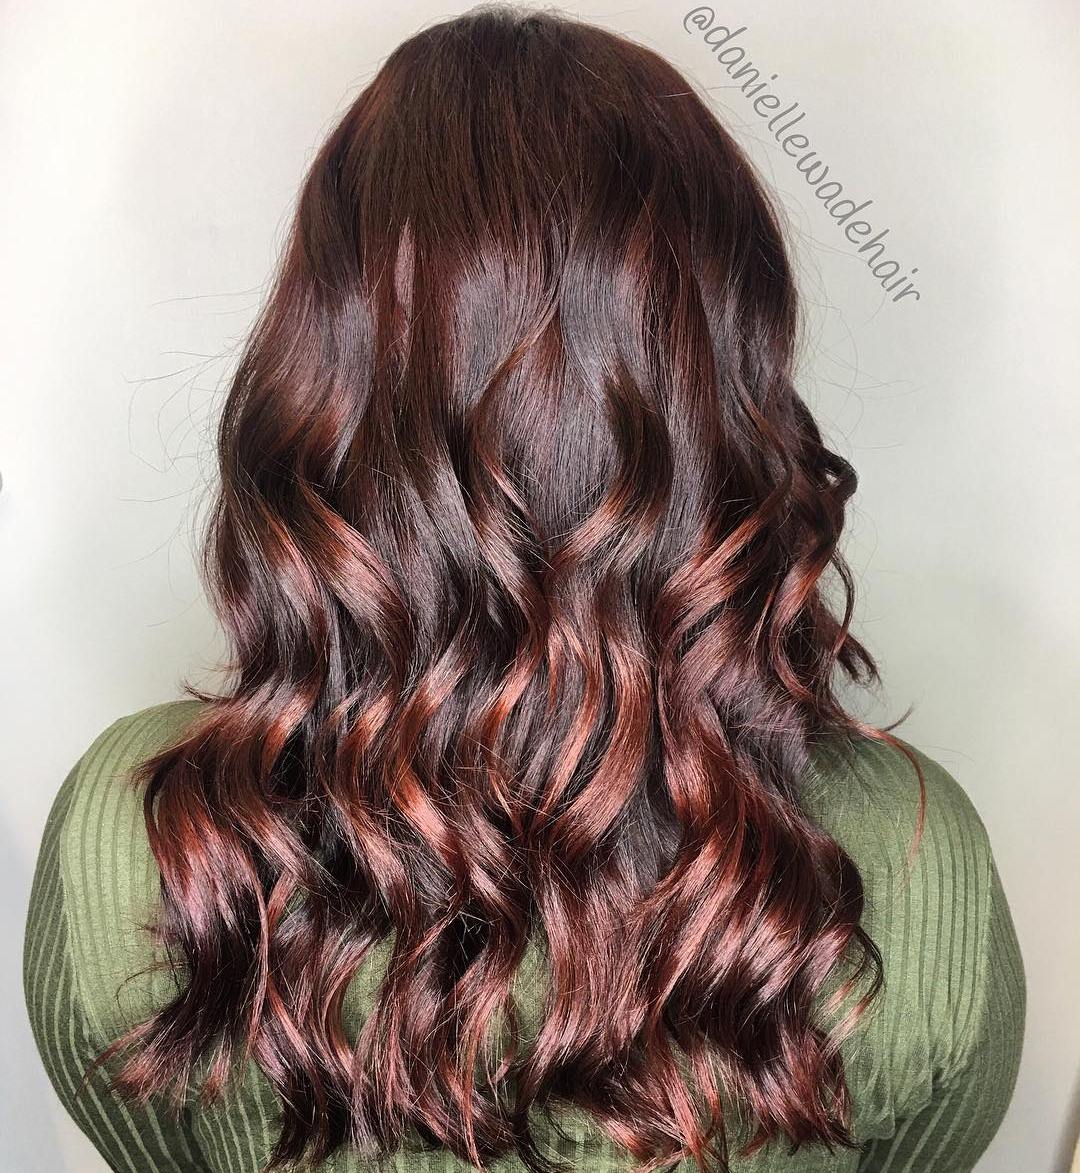 Caramel highlights on red hair